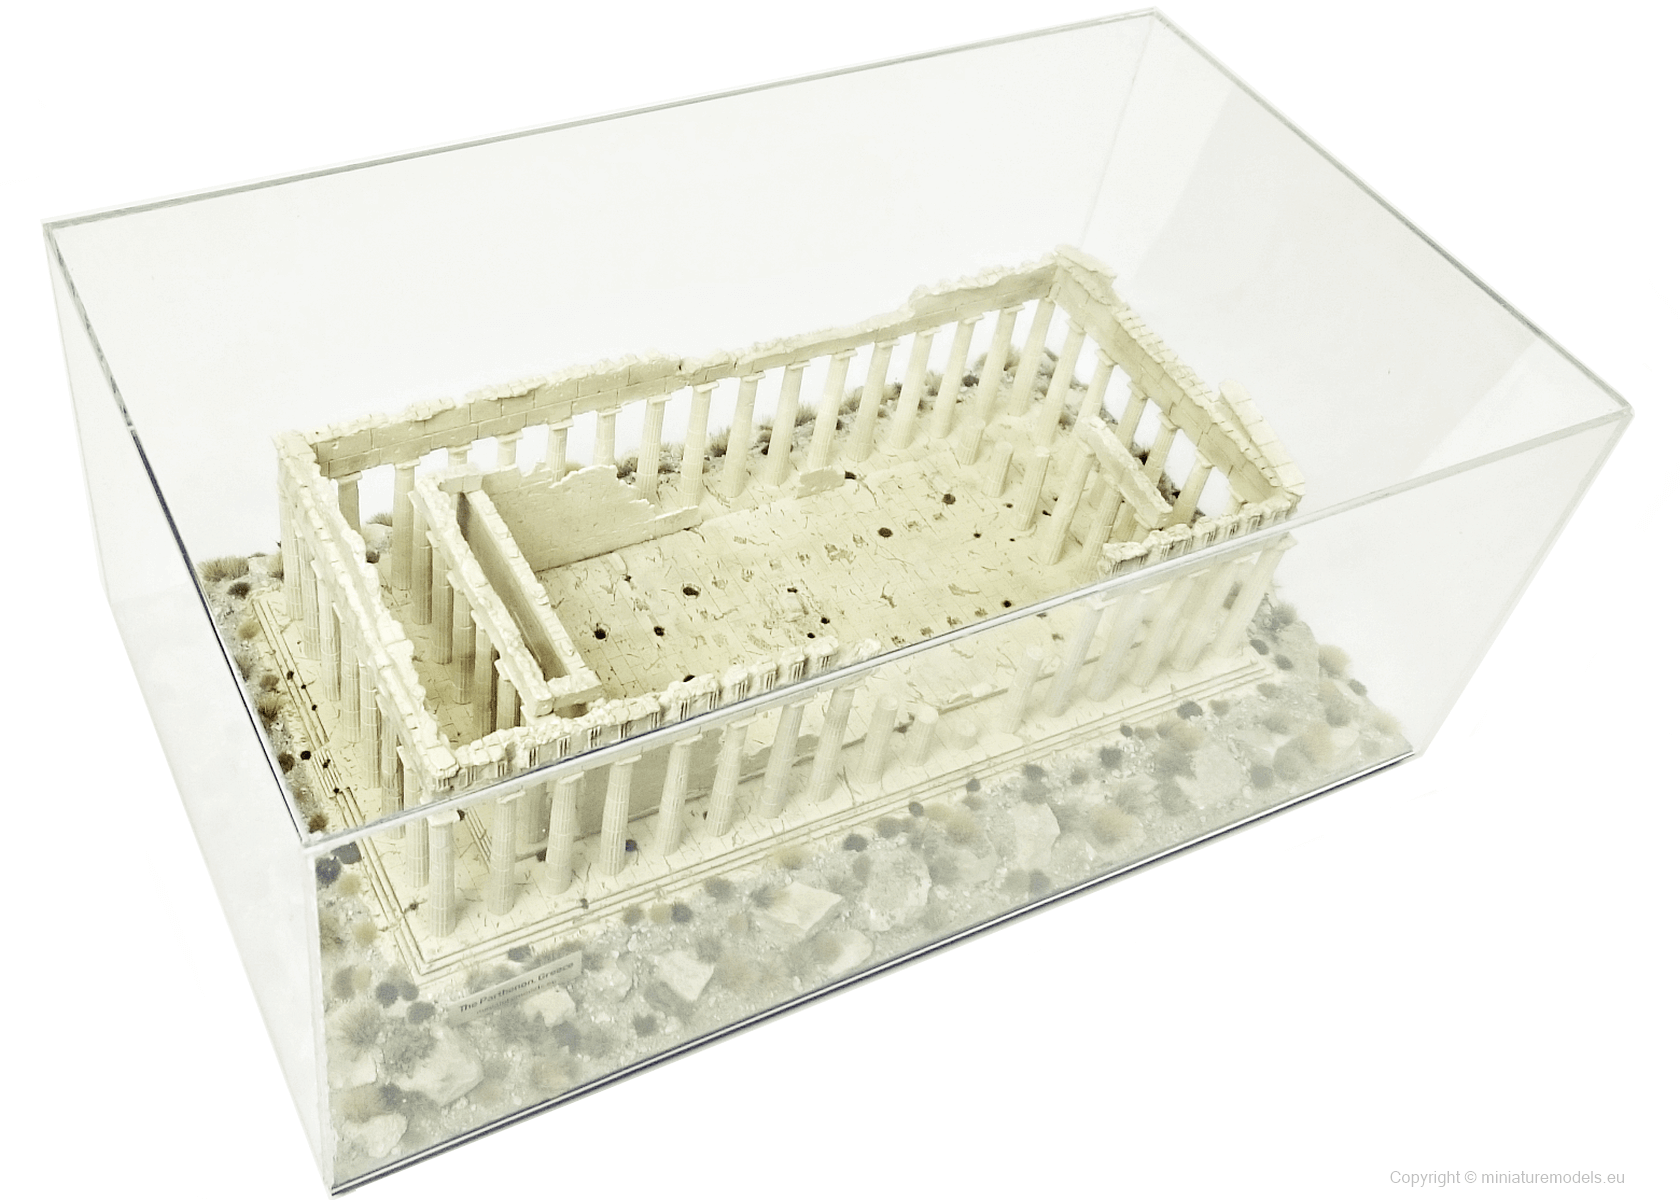 Parthenon model in transparent showcase